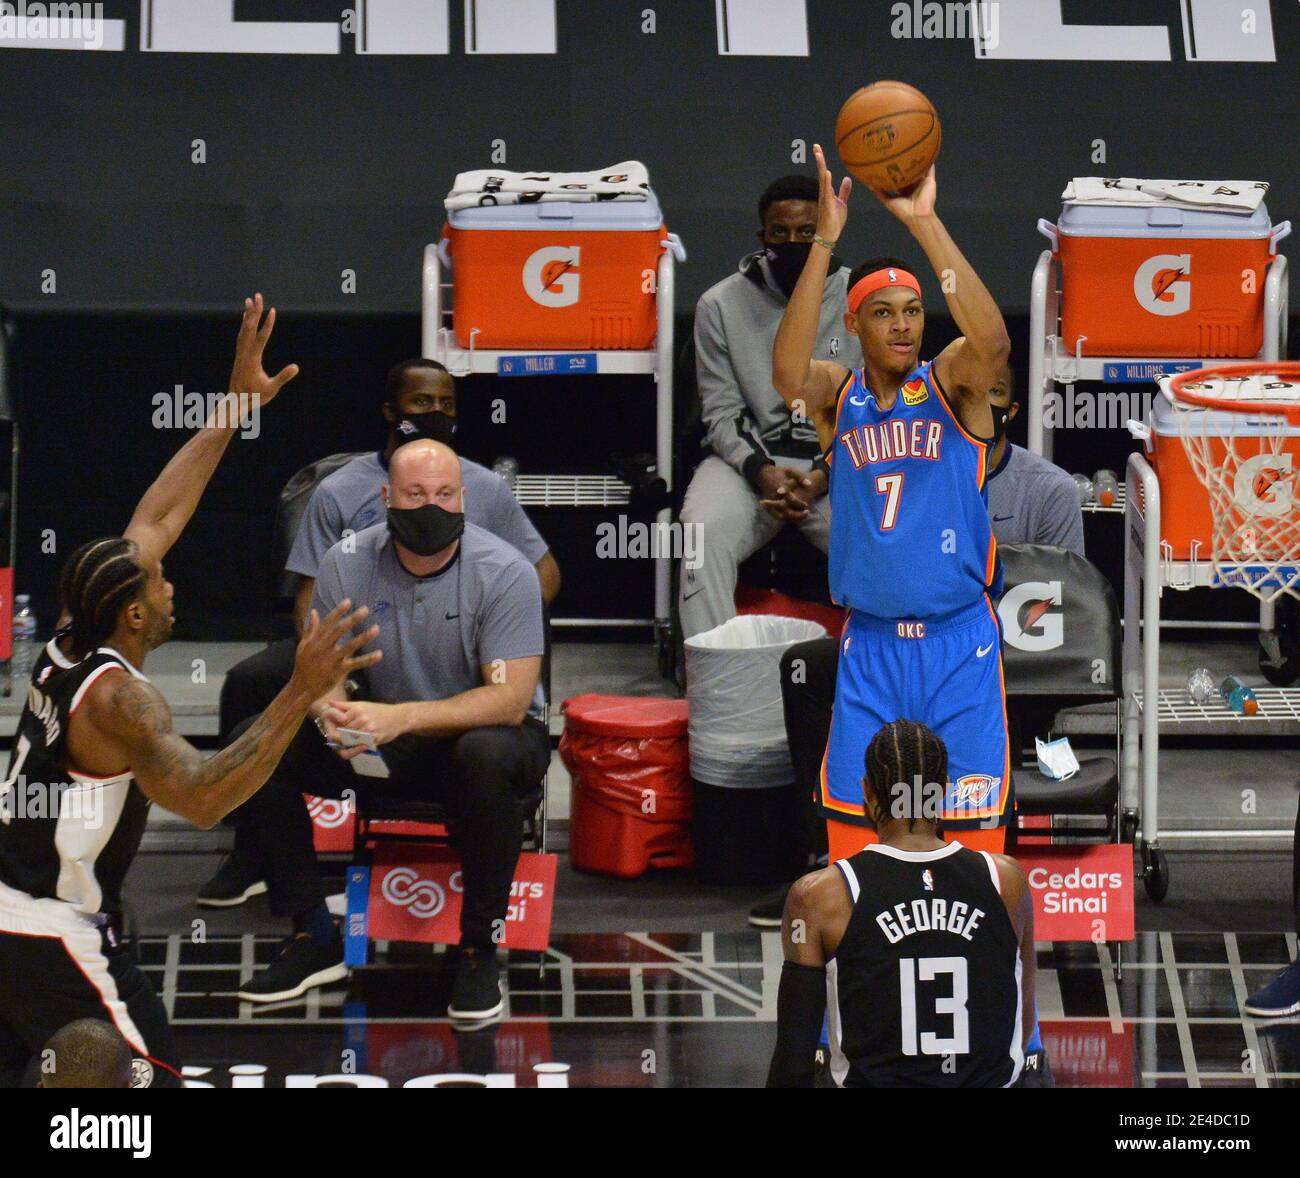 NBA Philadelphia 76ers Anthony Davis #23 Men's Replica Jersey, Large, Blue  : : Sports, Fitness & Outdoors